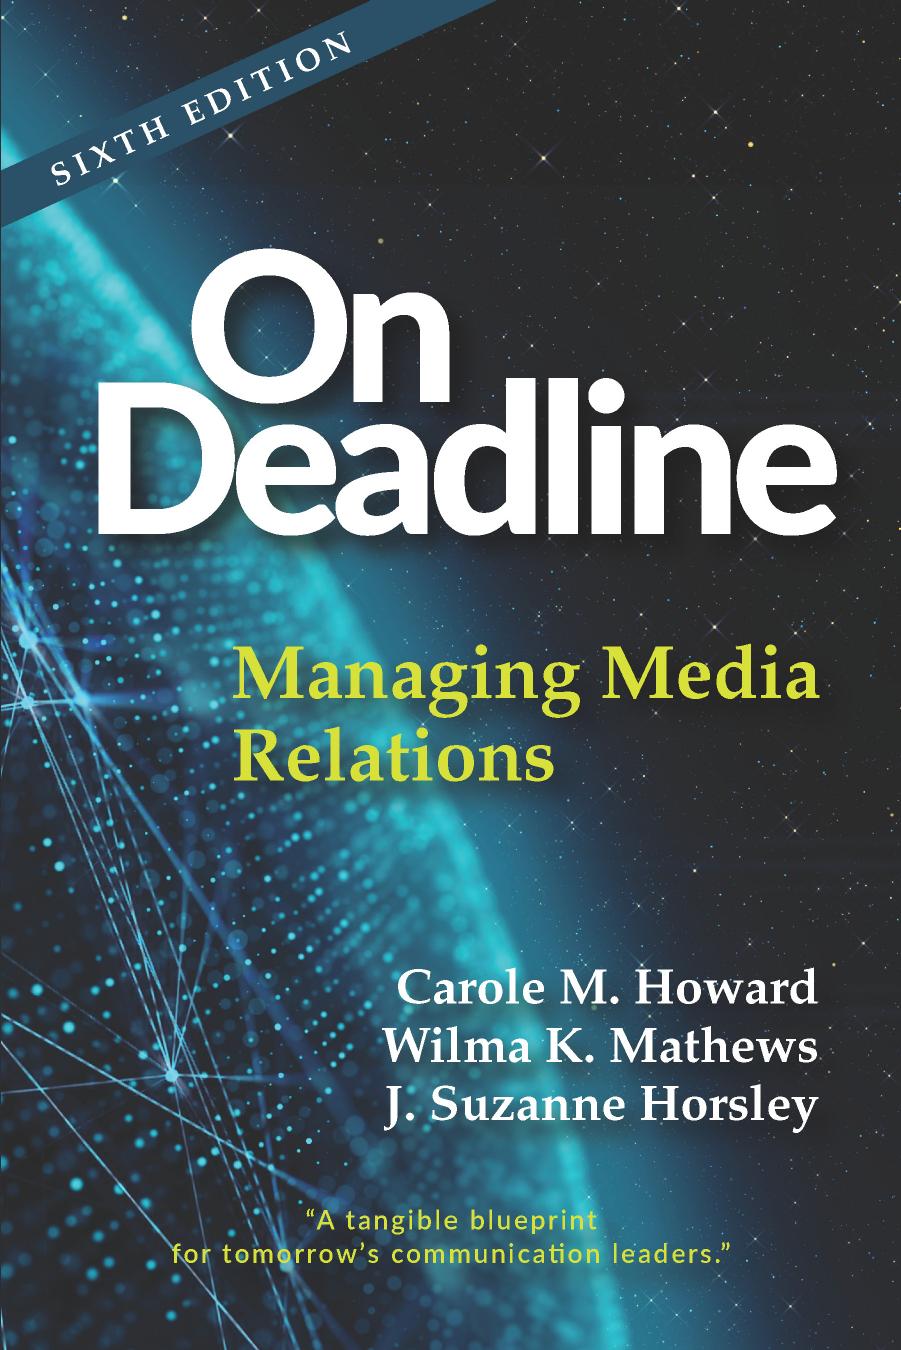 (eBook PDF)On Deadline: Managing Media Relations 6th Edition by Carole M. Howard,Wilma K. Mathews,J. Suzanne Horsley